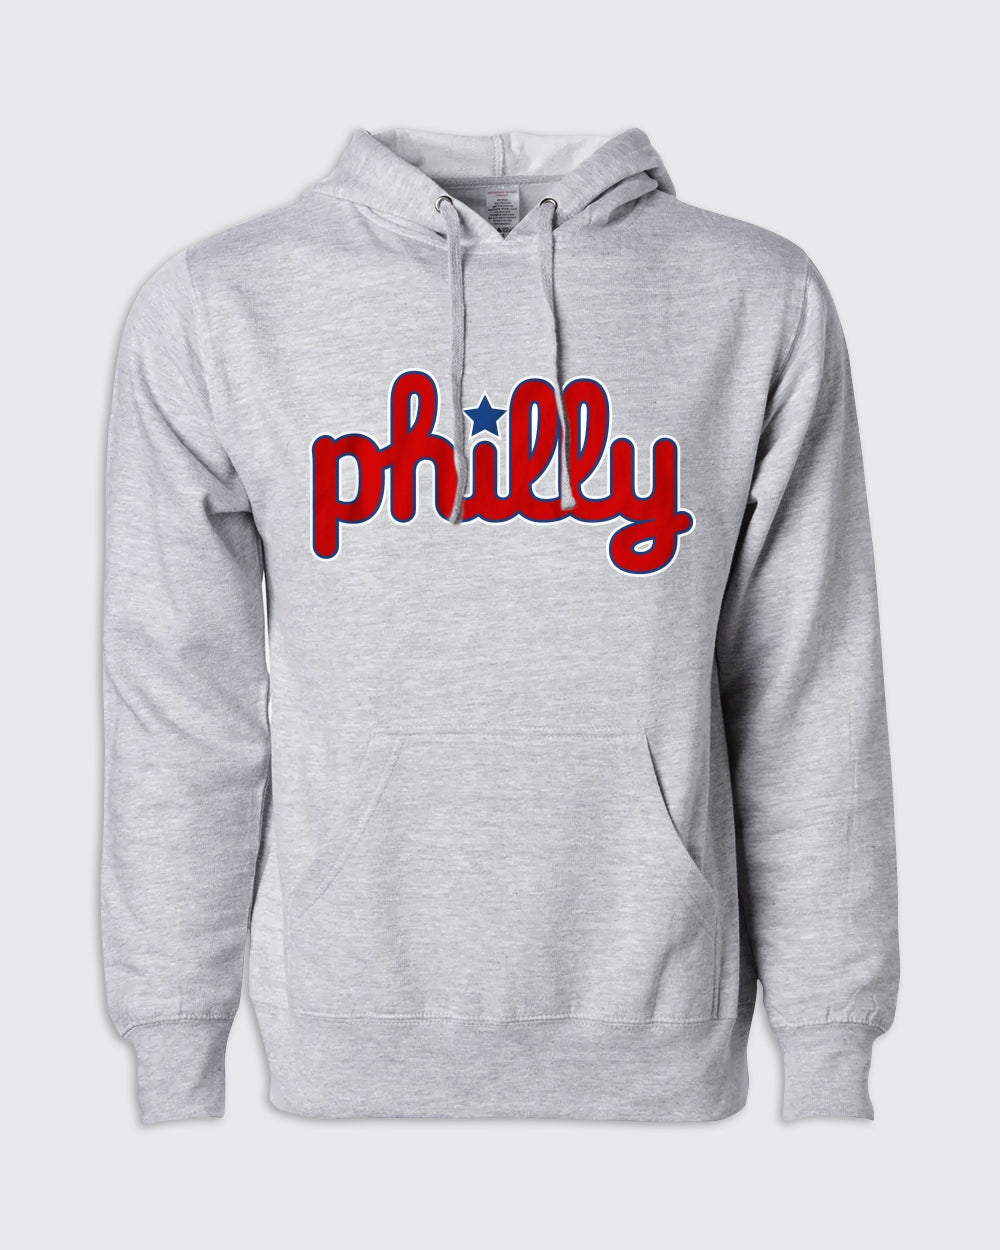 Cursive Phillies Cropped Hooded Sweatshirt 